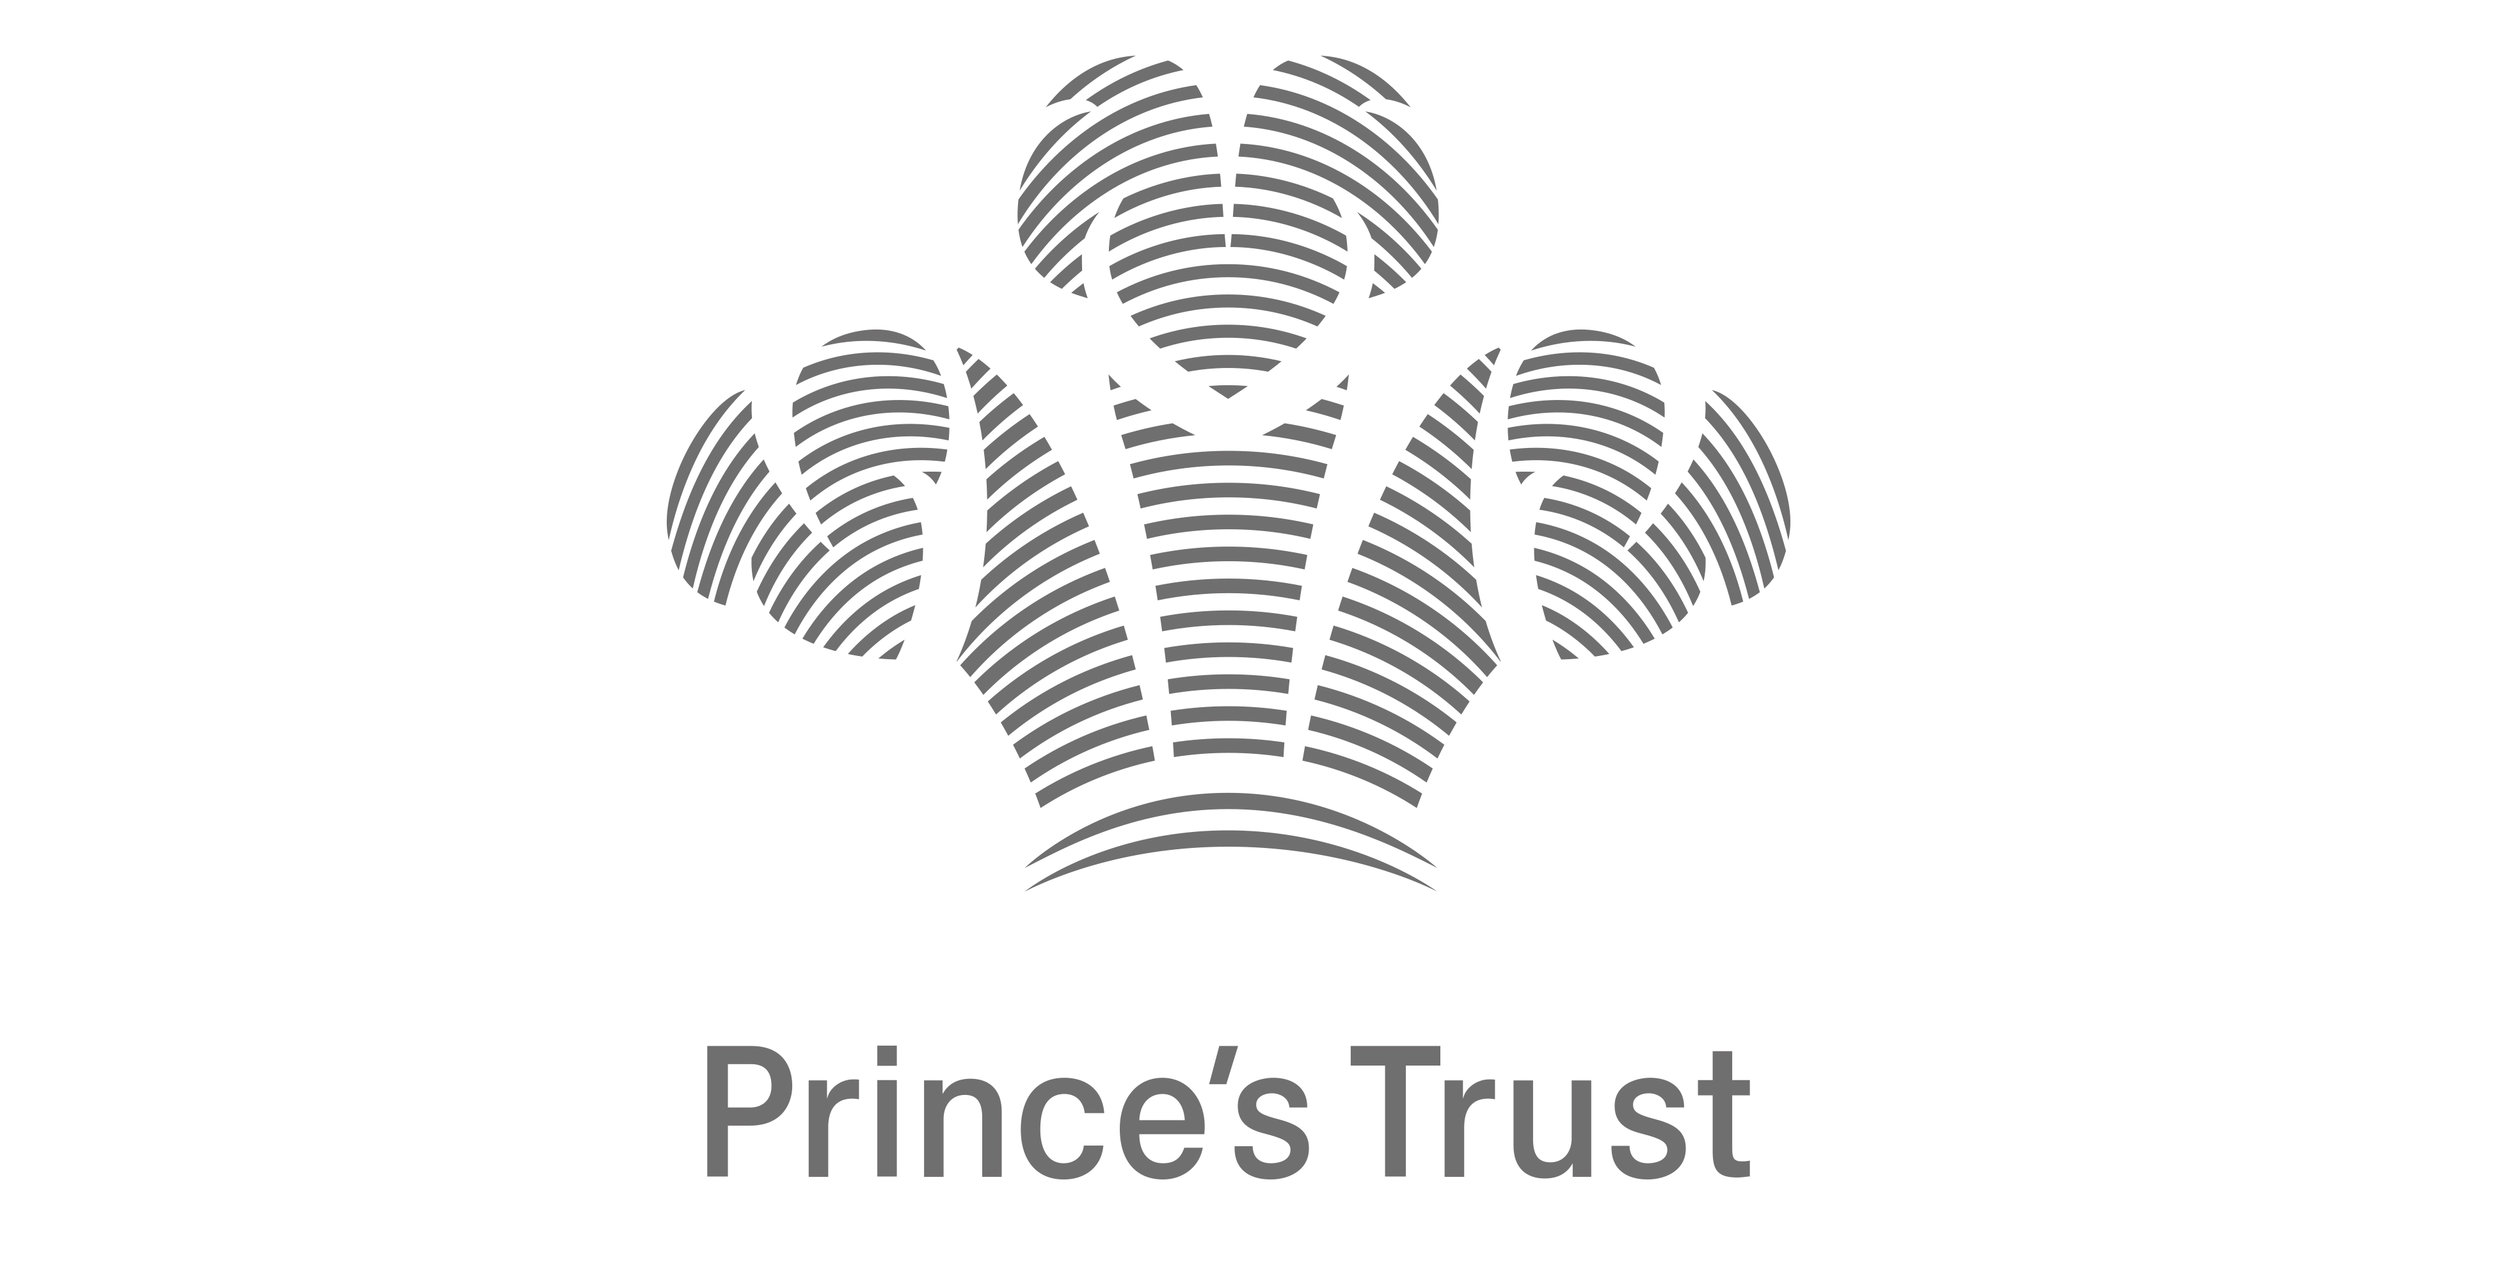 Princes trust logo.jpg